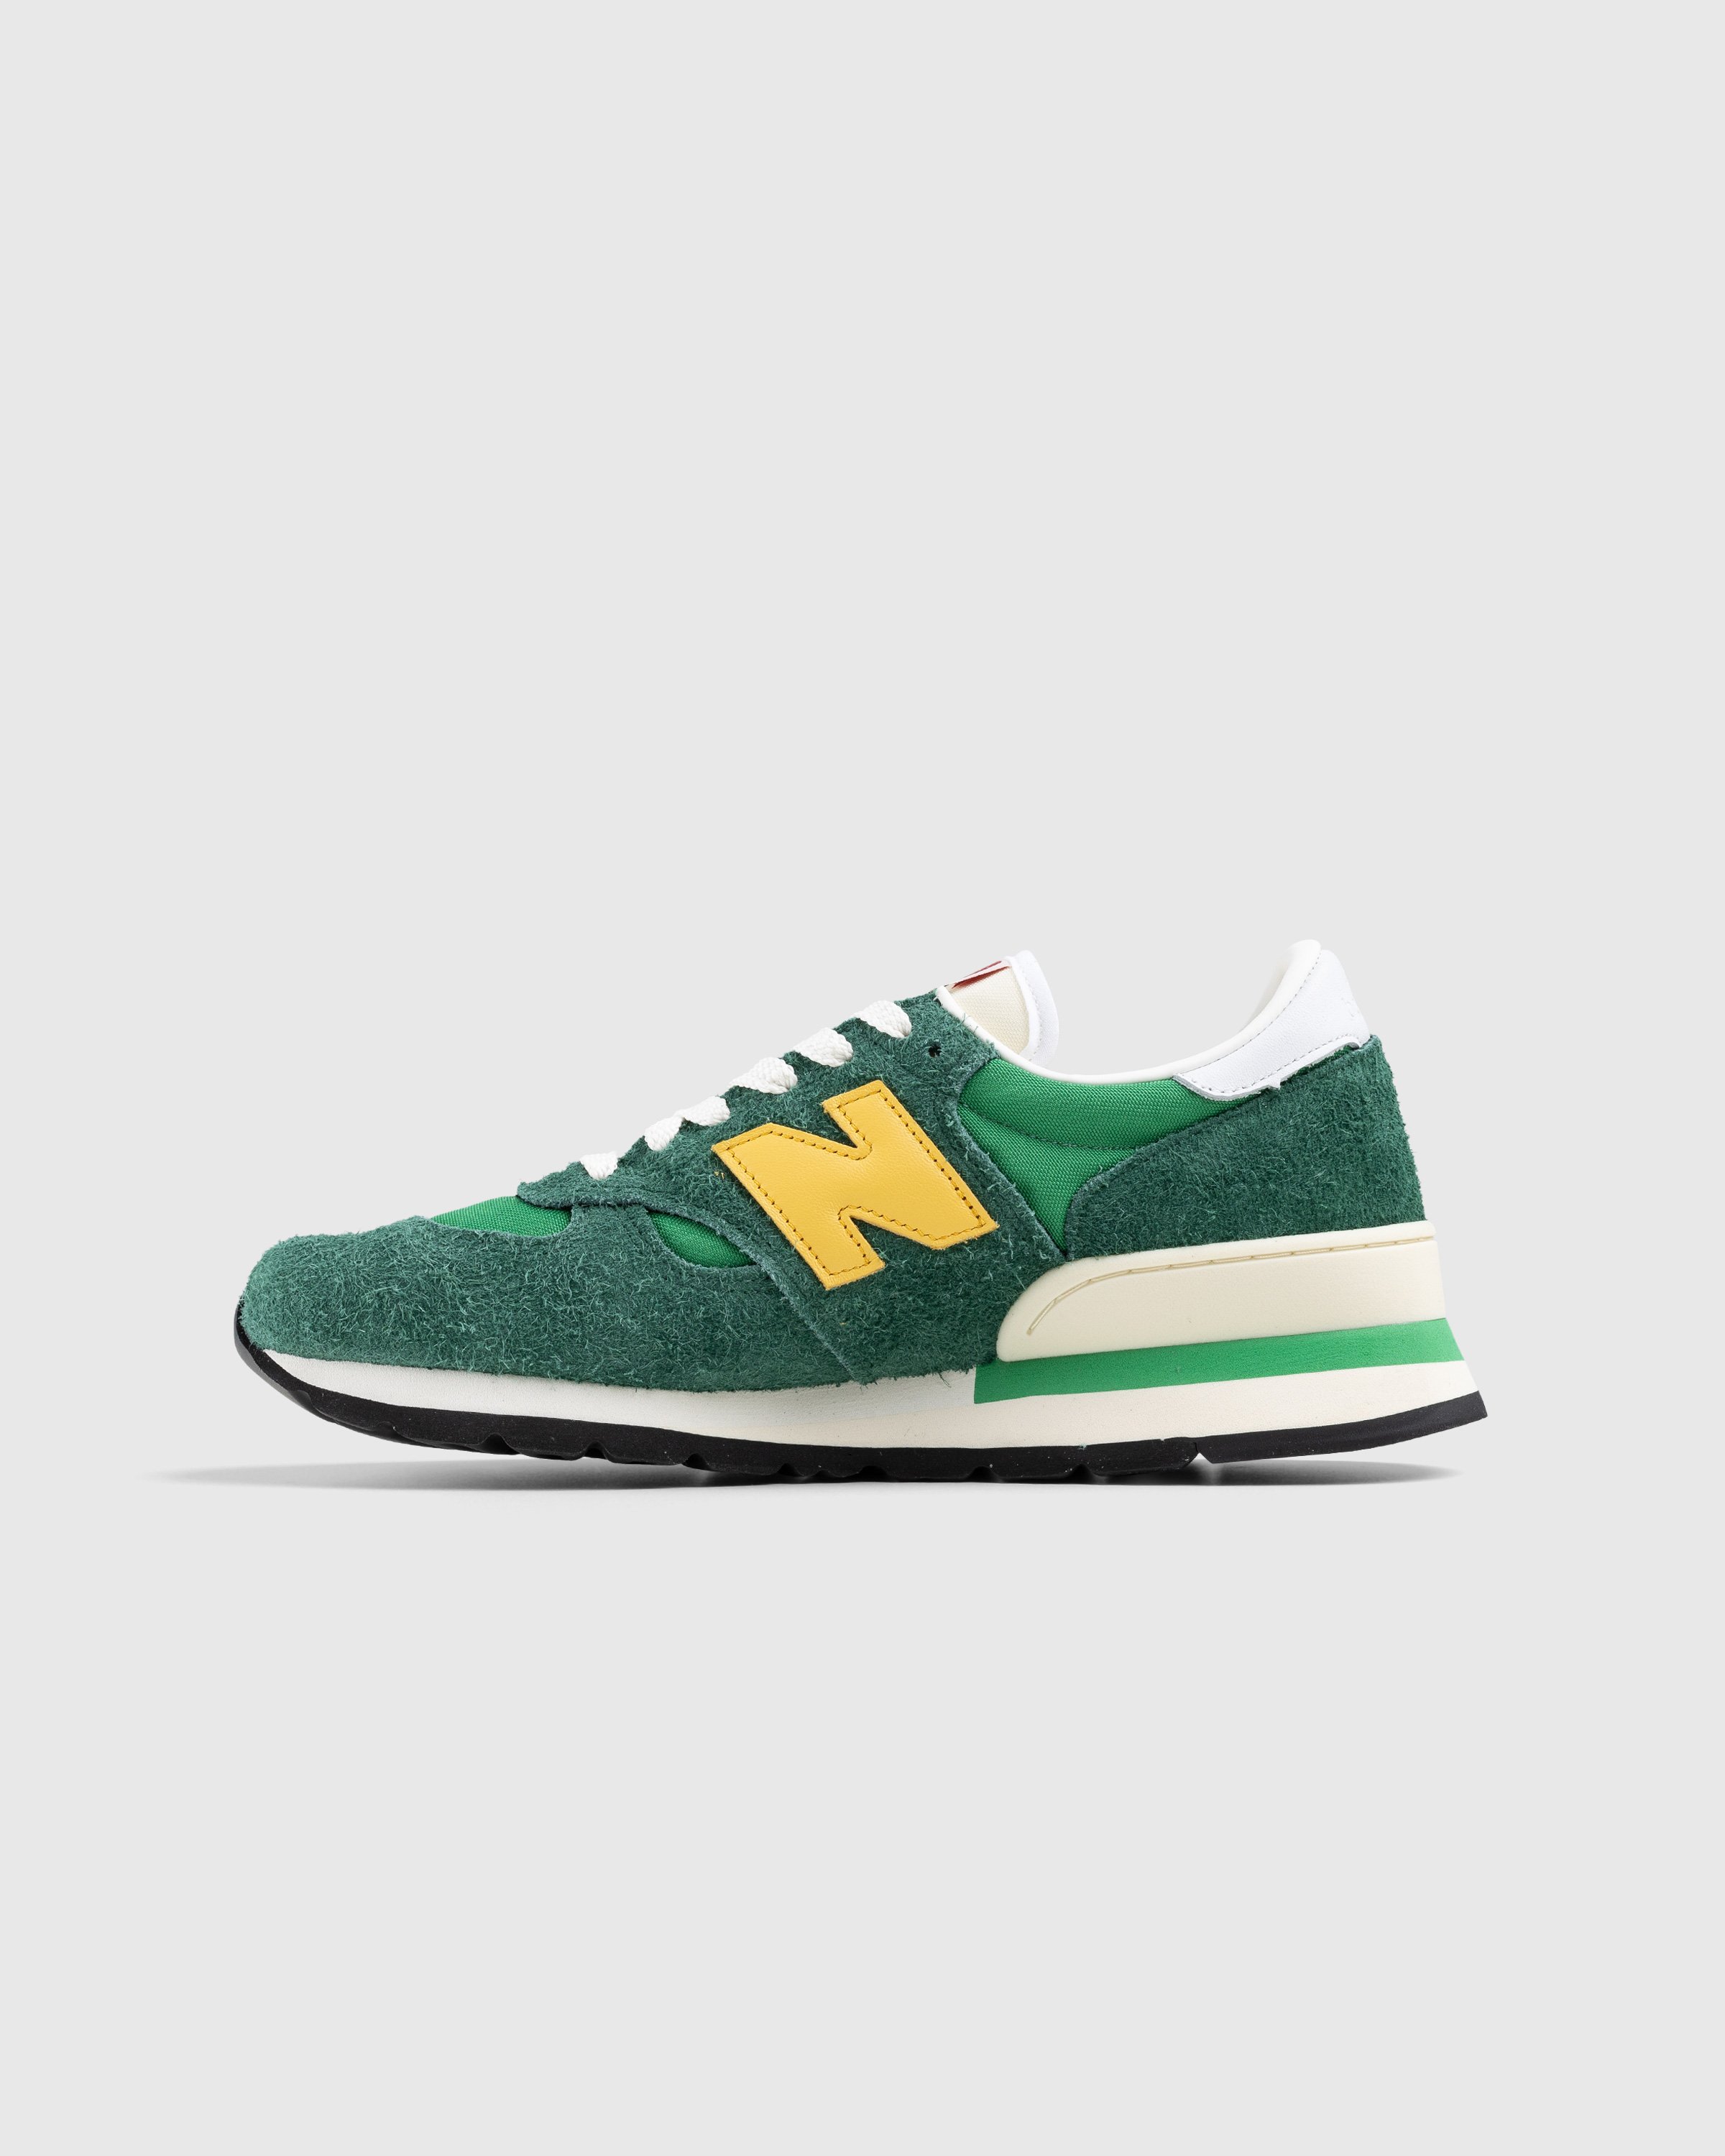 New Balance - M990GG1 Green - Footwear - Green - Image 2